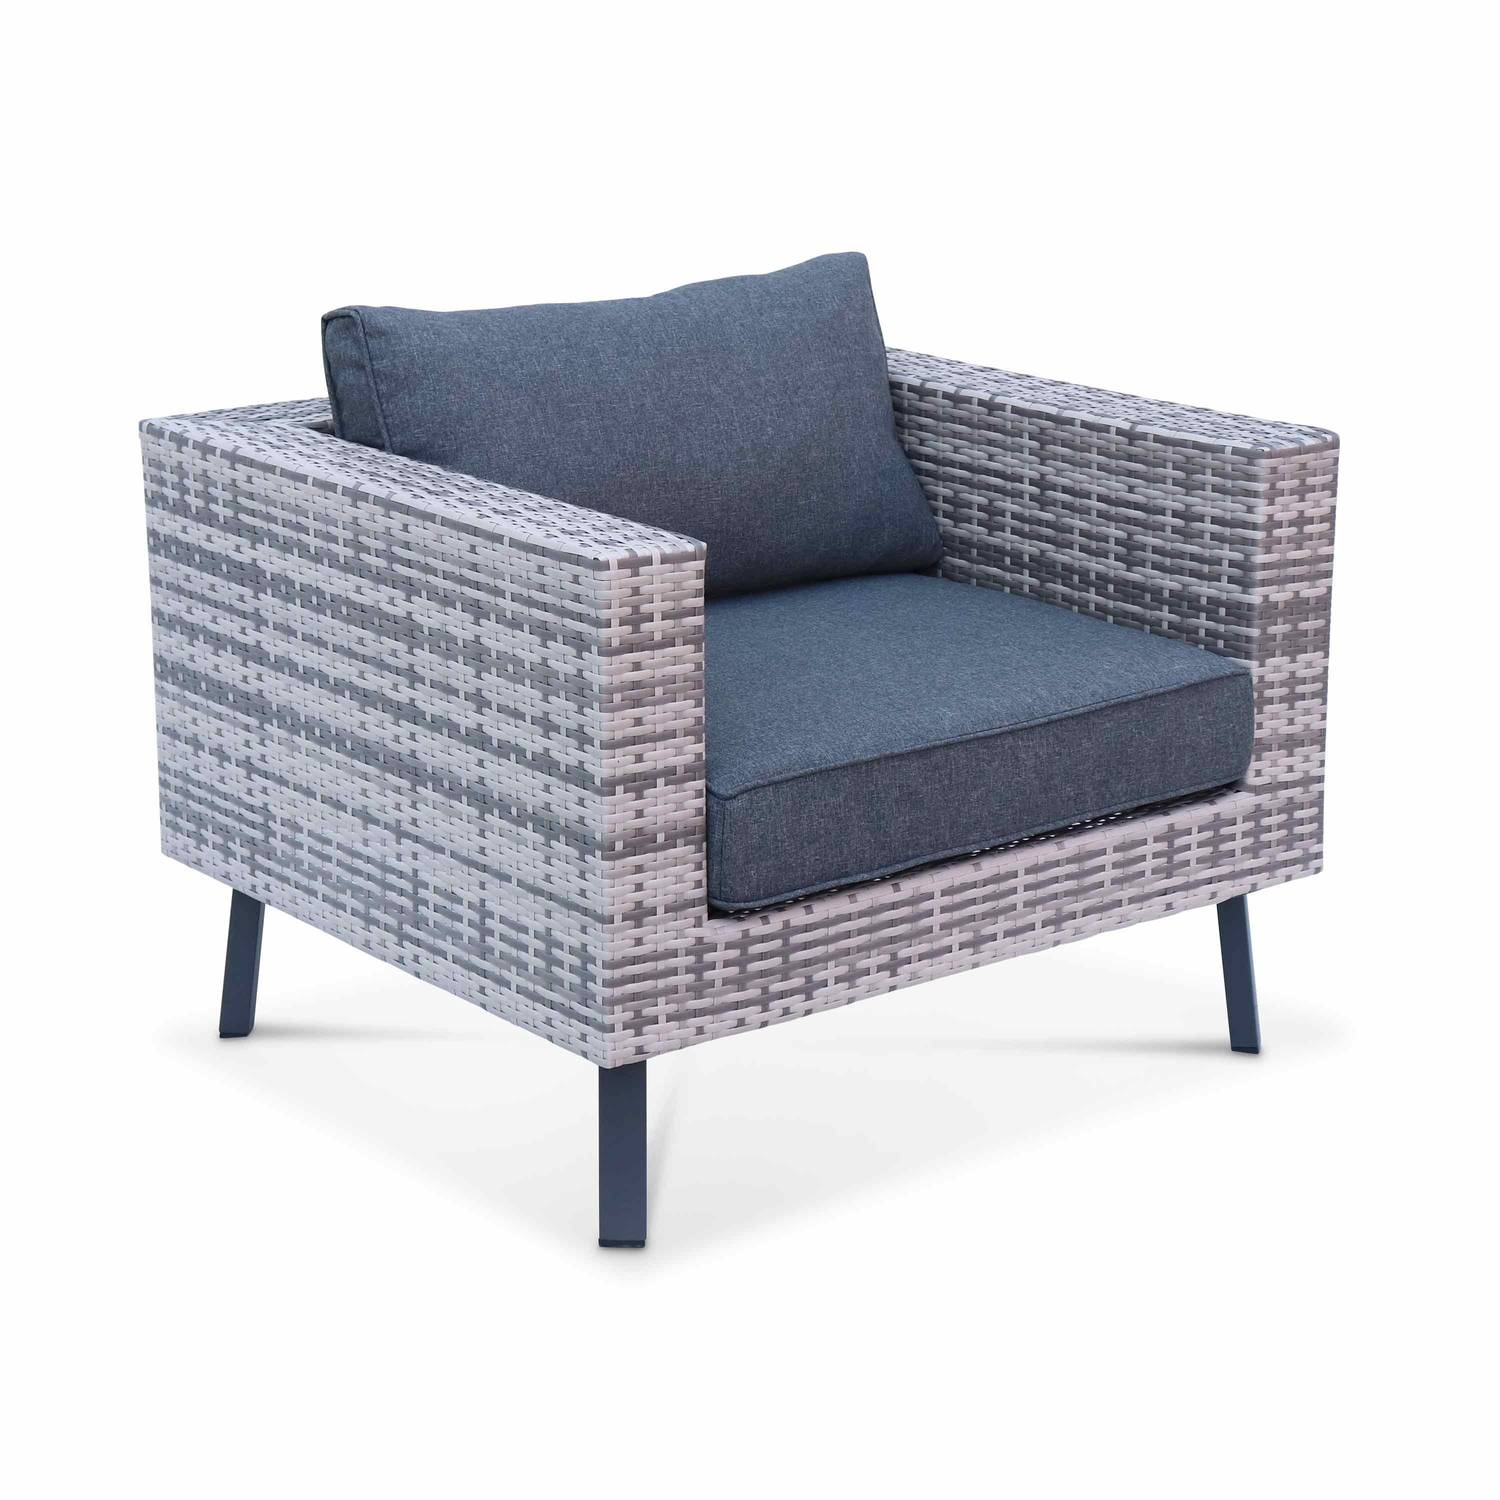 5-seater elevated polyrattan garden sofa set with stylish legs - sofa, 2 armchairs, footrest, coffee table - Alba - Mixed Grey rattan, Charcoal Grey cushions  Photo2